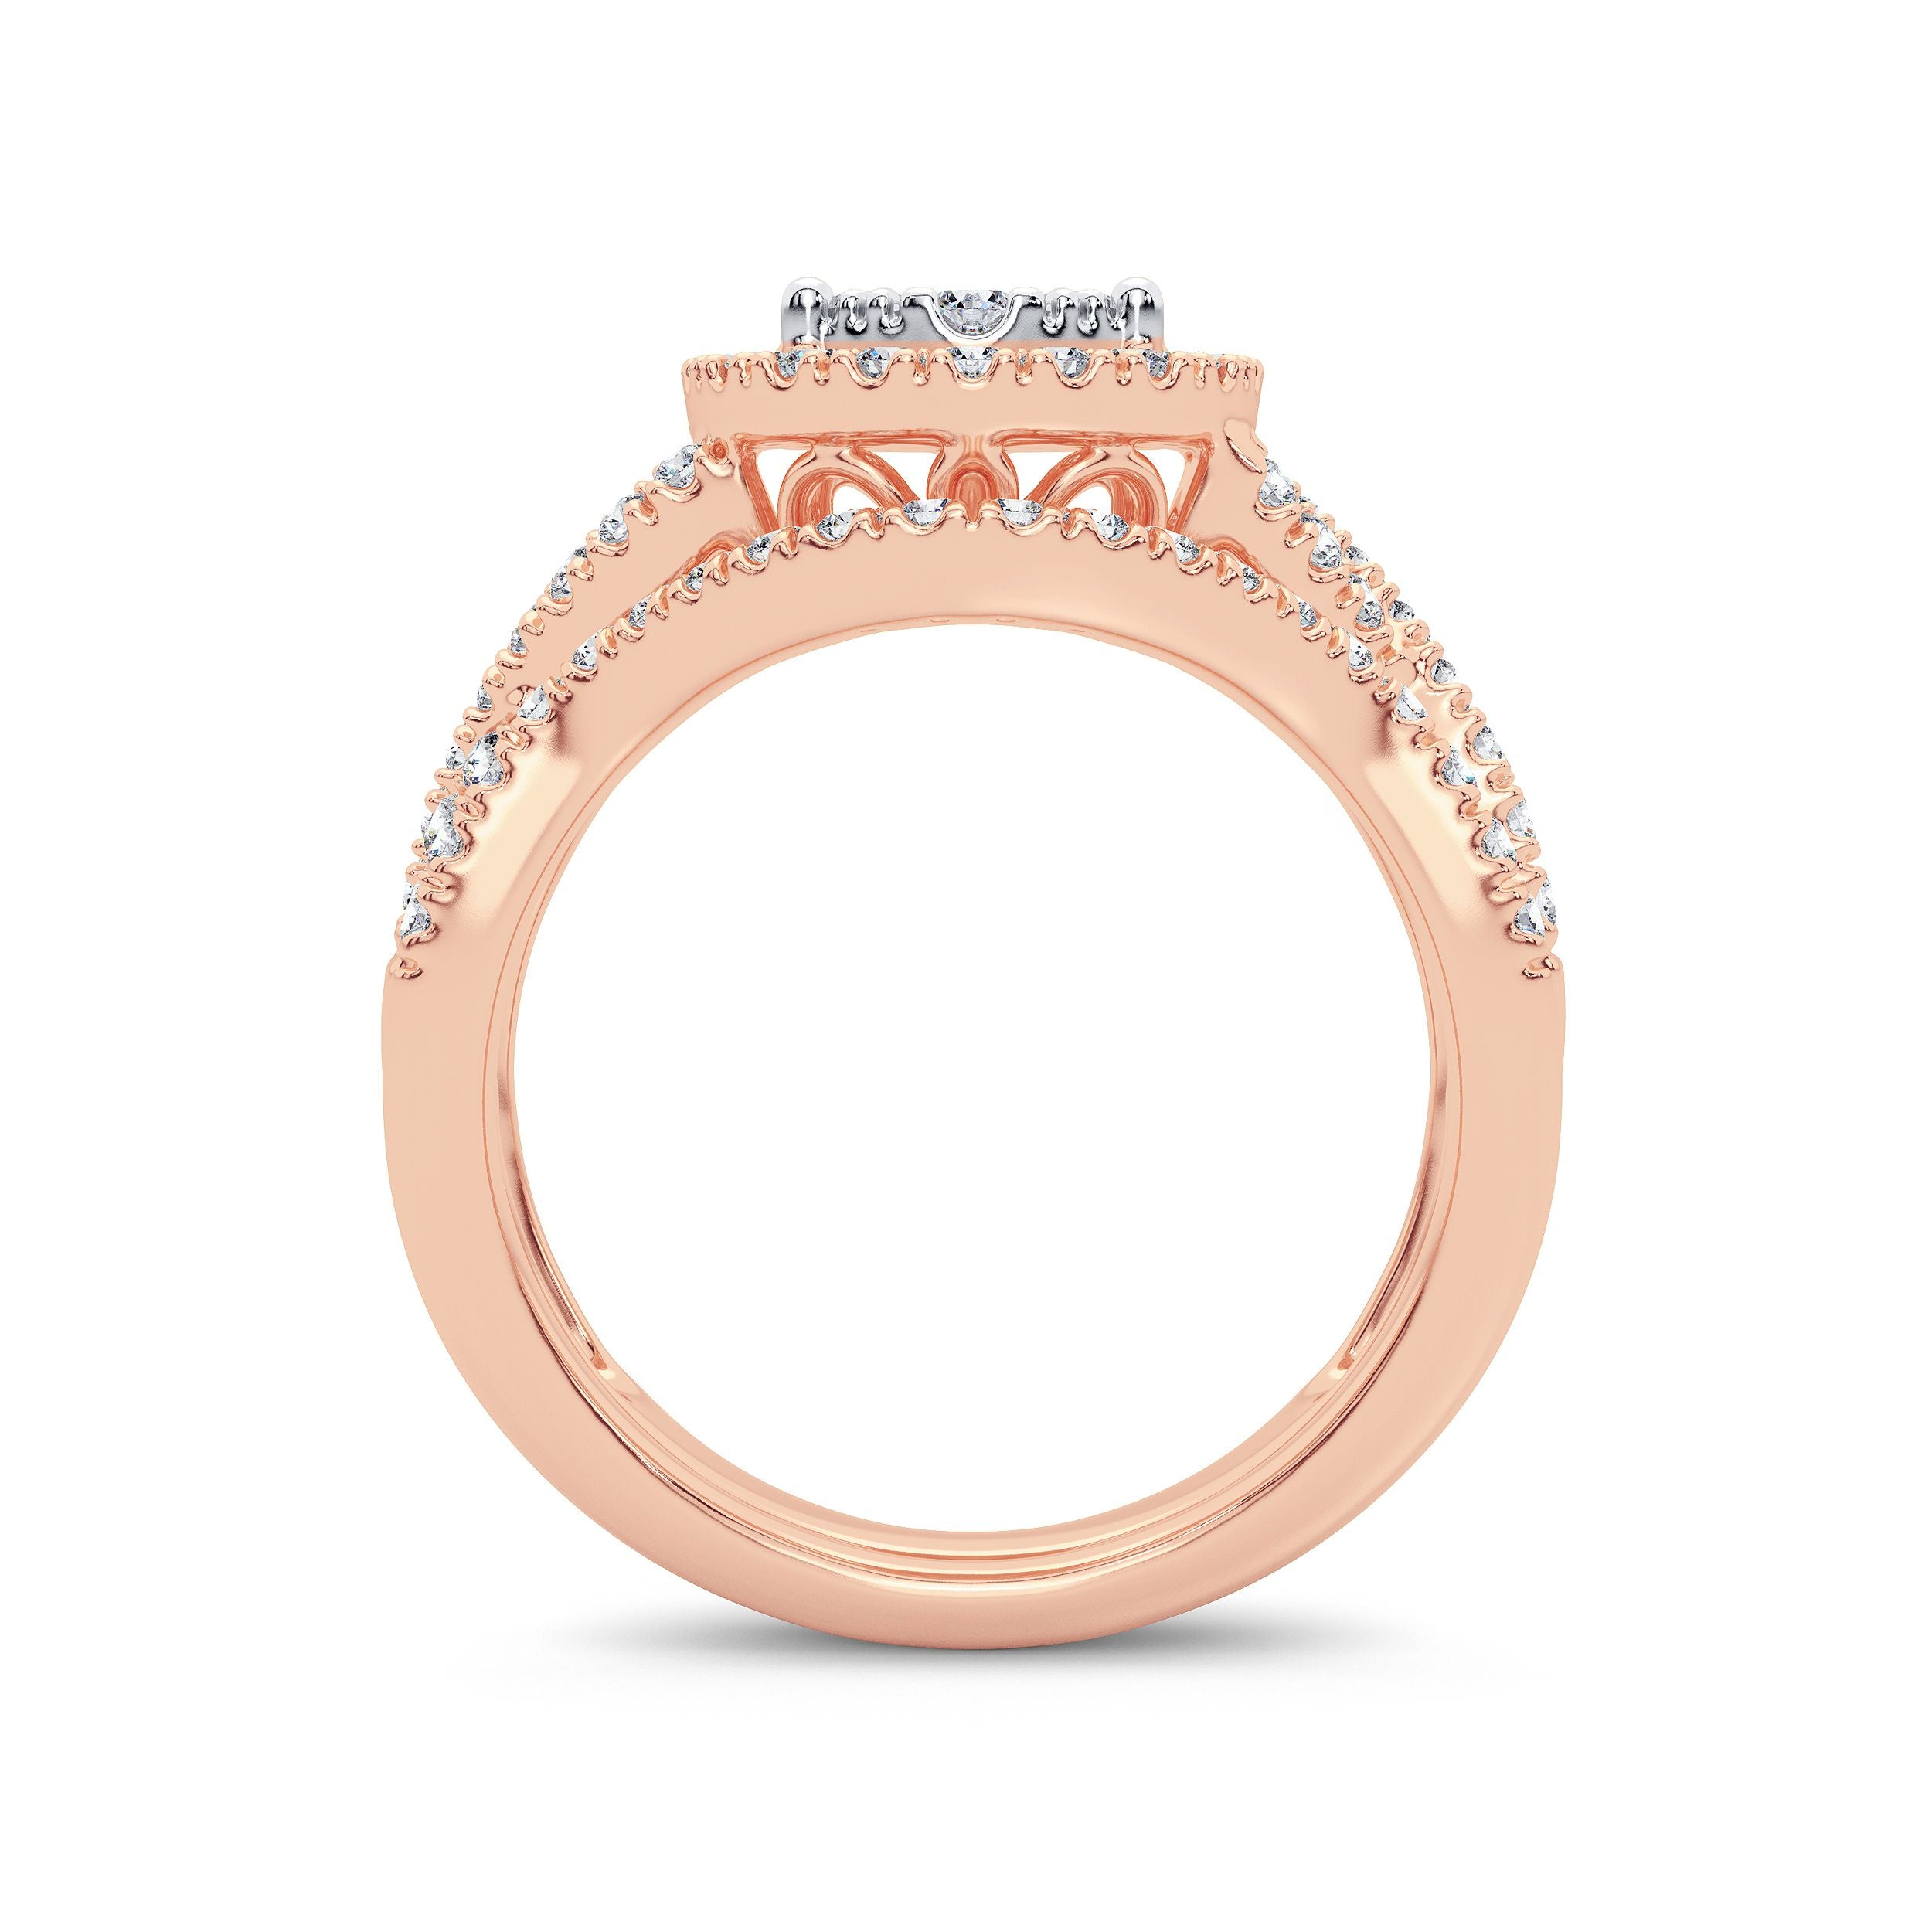 14K 1.00ct Diamond Bridal Ring